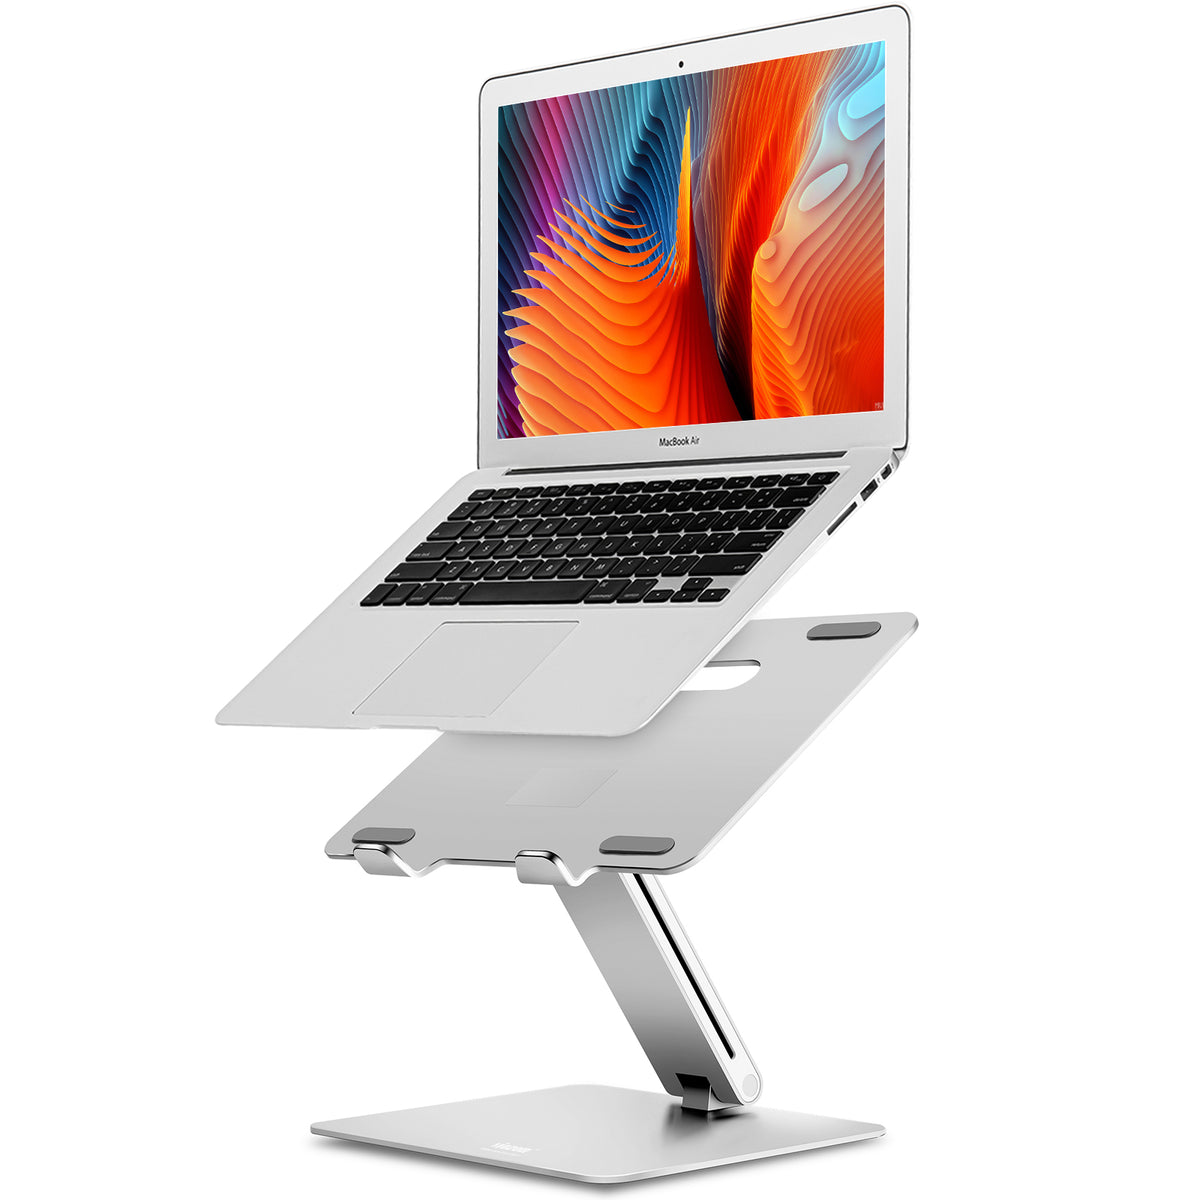 Viozon Portable Desk Laptop Stand